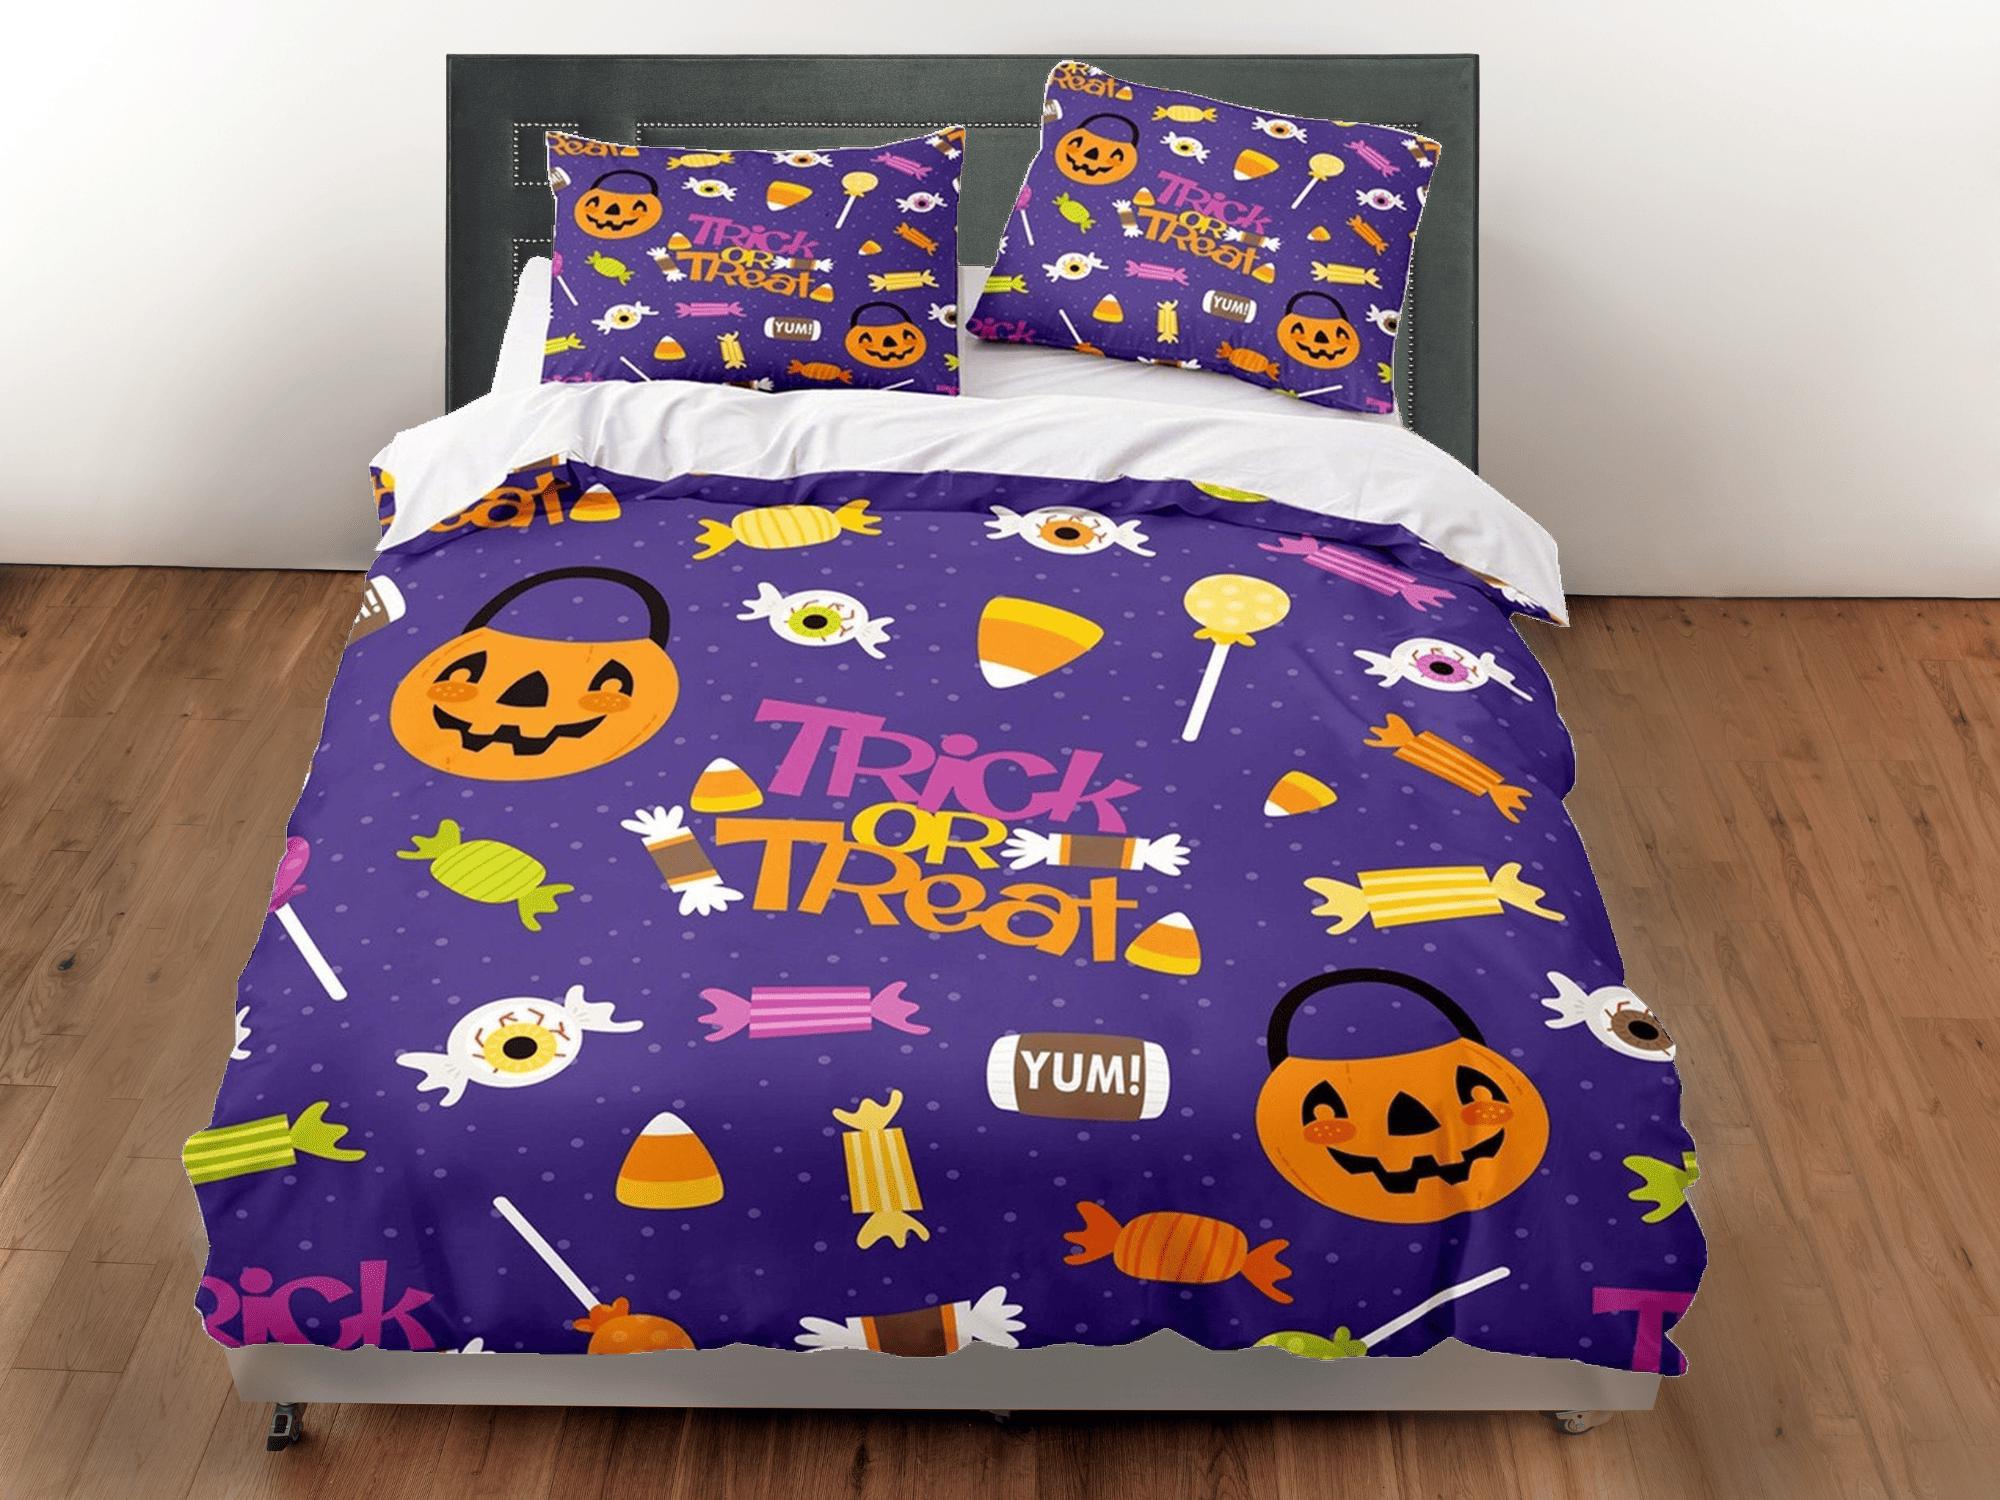 daintyduvet Trick or treat halloween full bedding & pillowcase, periwinkle purple duvet cover set dorm bedding, nursery toddler bedding, halloween gift